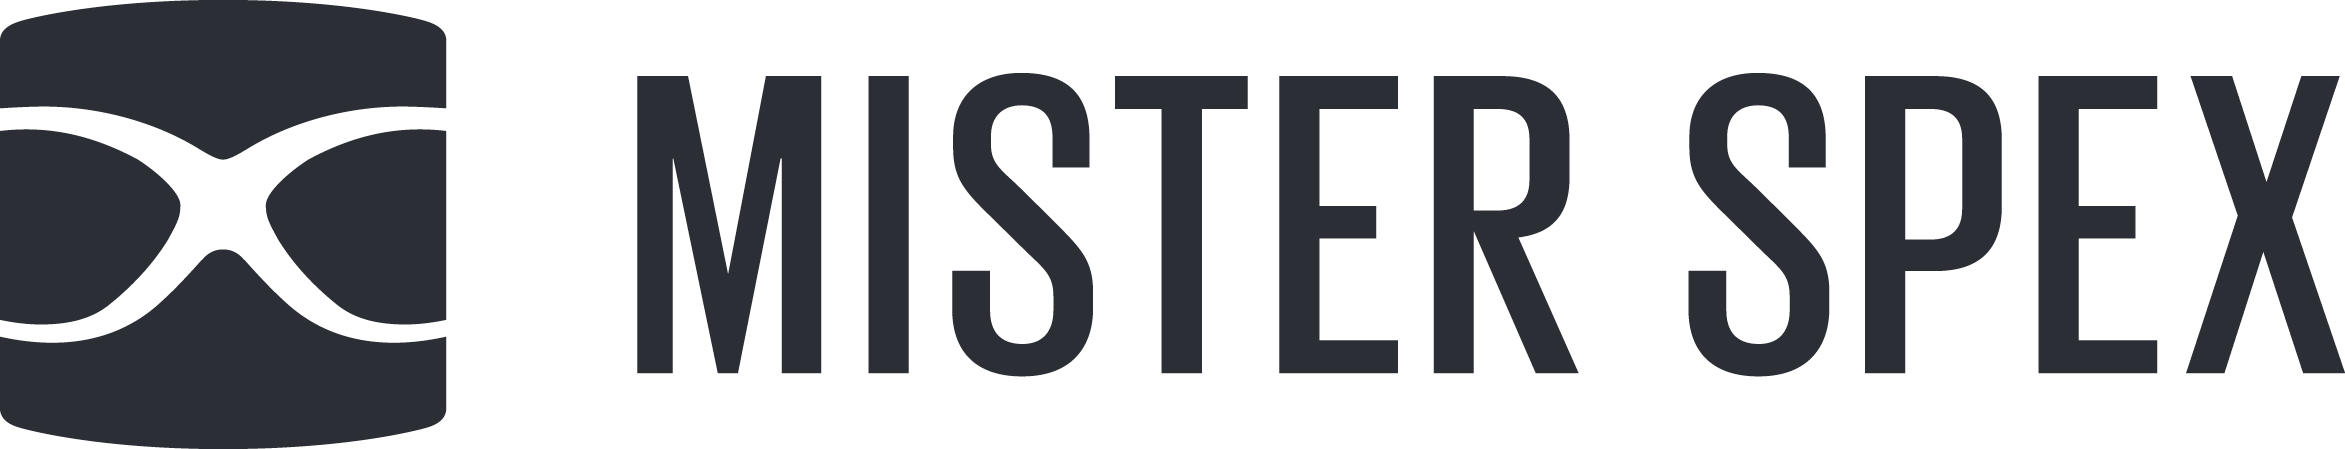 Mister-Spex-Logo_print